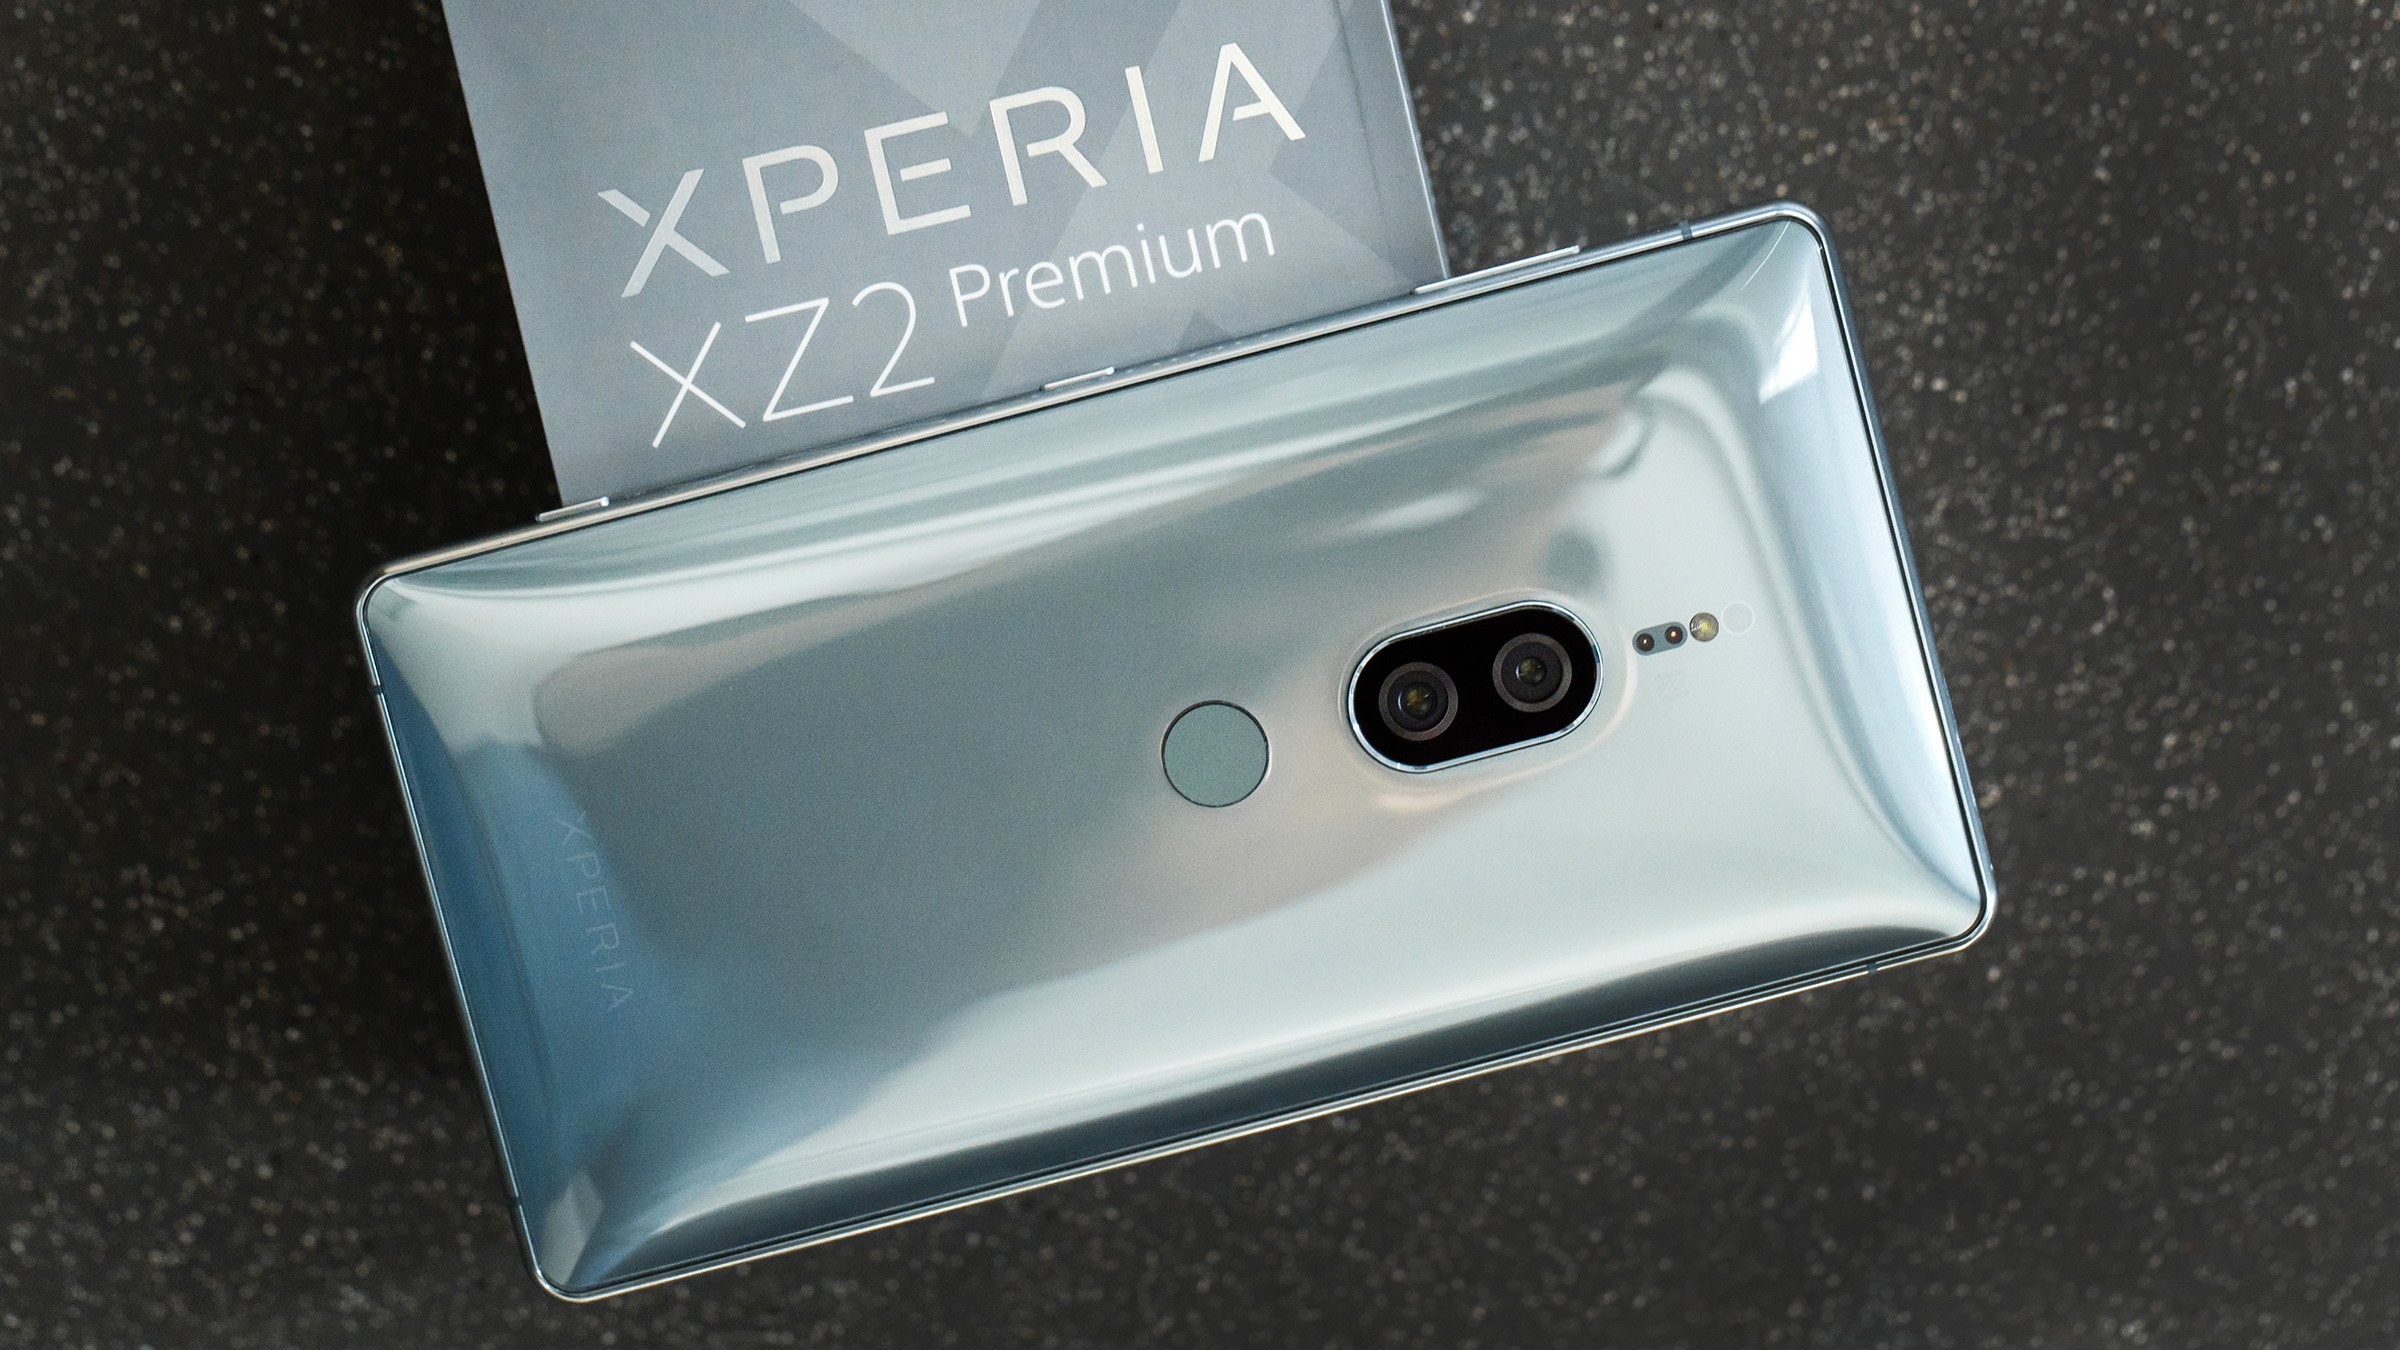 Sony xperia xz2 premium test chip china murah mobile